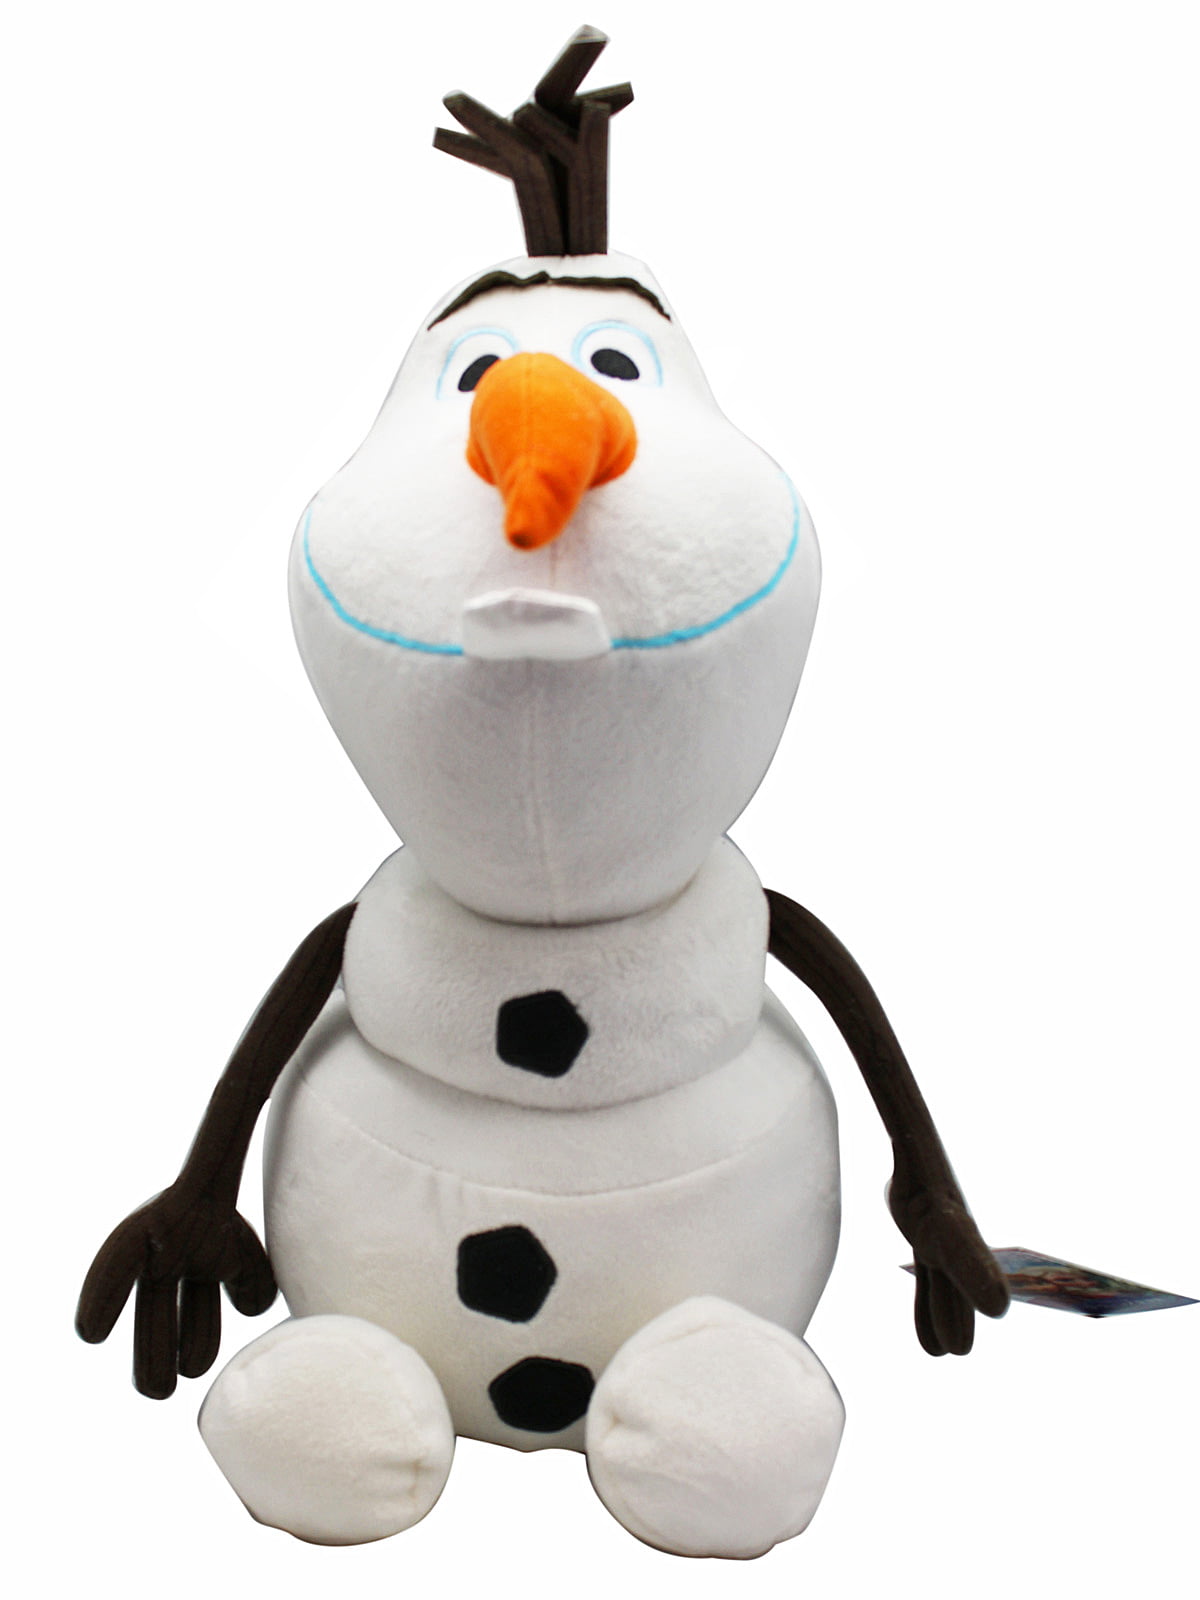 Disney Frozen Olaf Snowman 15in Super Soft Stuffed Plush Childrens Toy for sale online